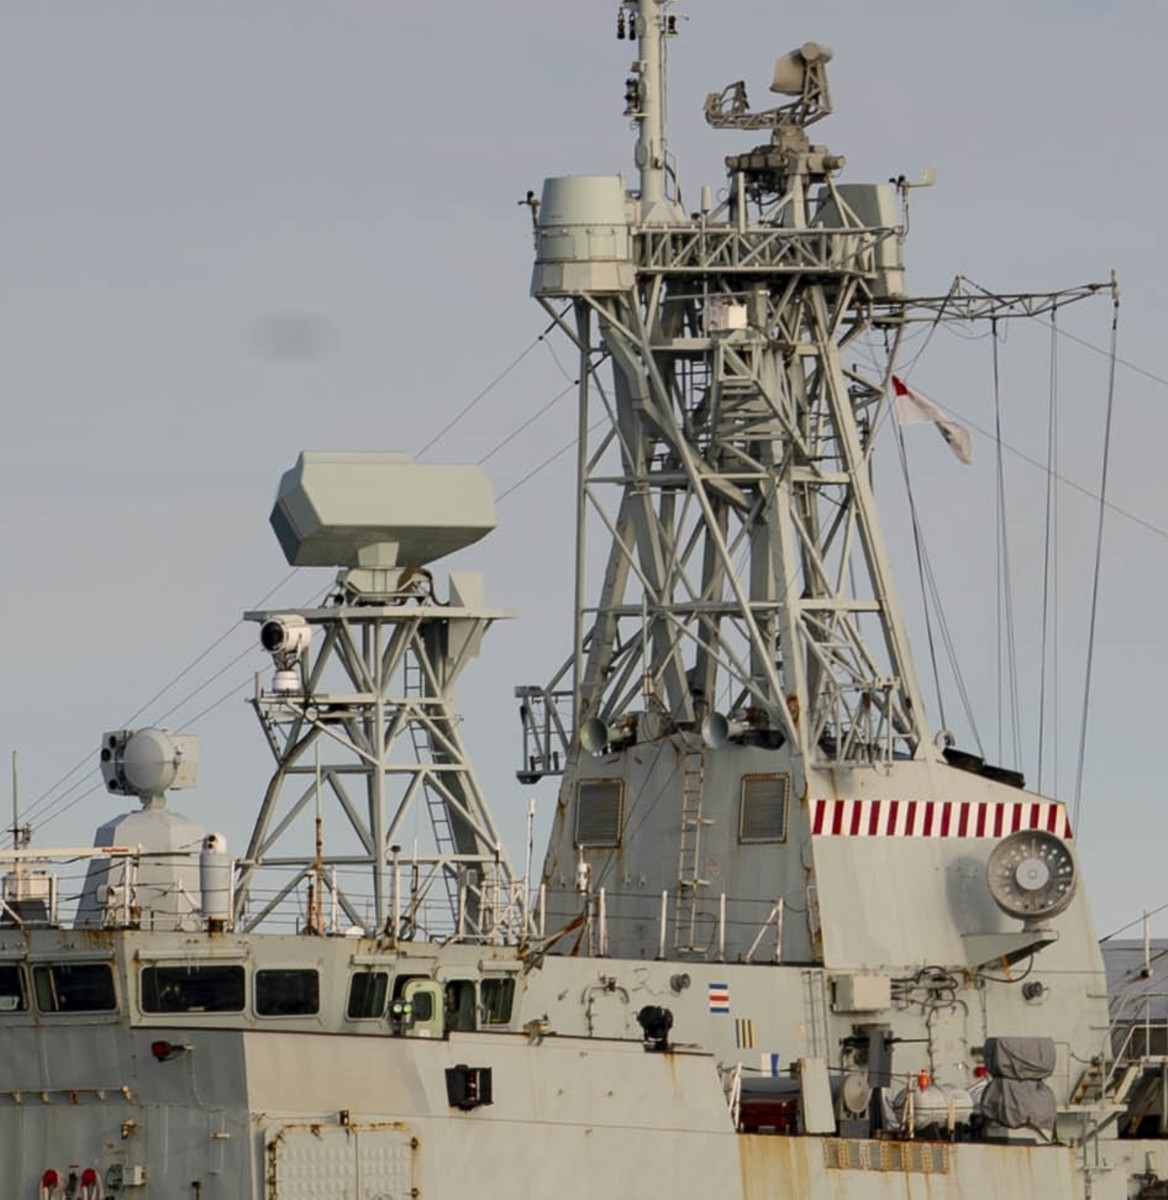 ffh-332 hmcs ville de quebec halifax class helicopter patrol frigate ncsm royal canadian navy 10a thales smart-s radar saab sea giraffe